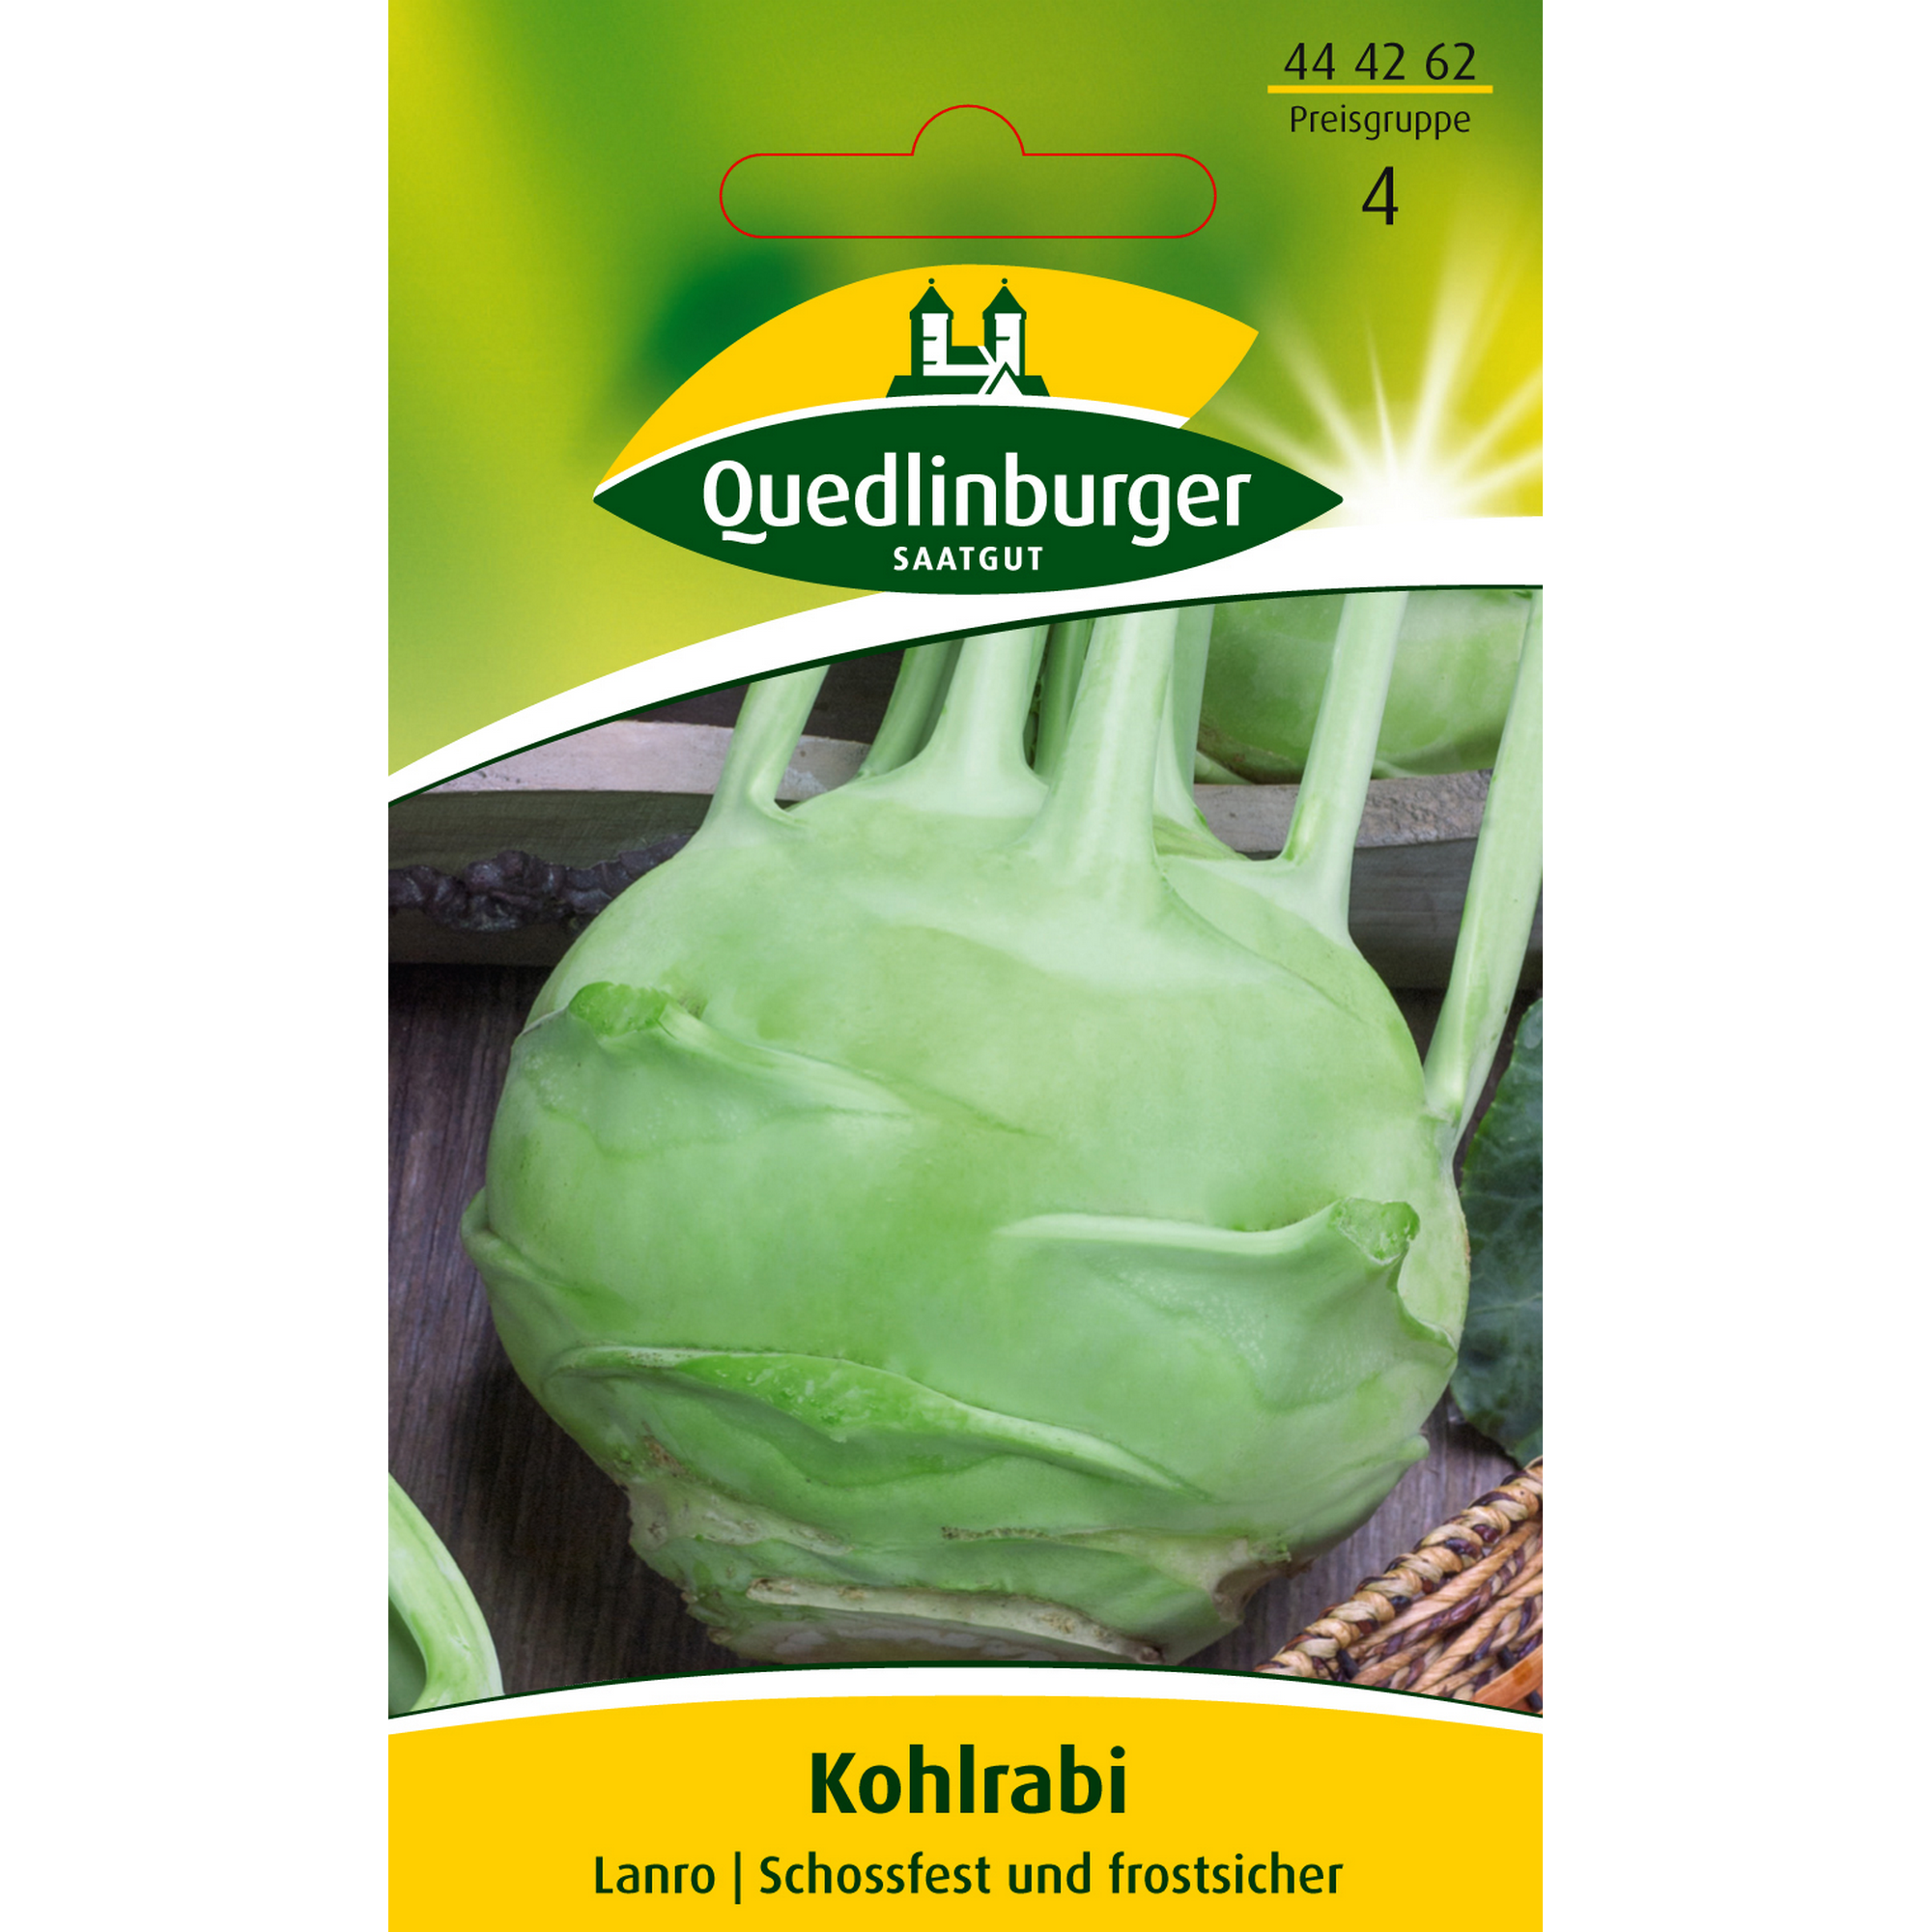 Kohlrabi 'Lanro' + product picture